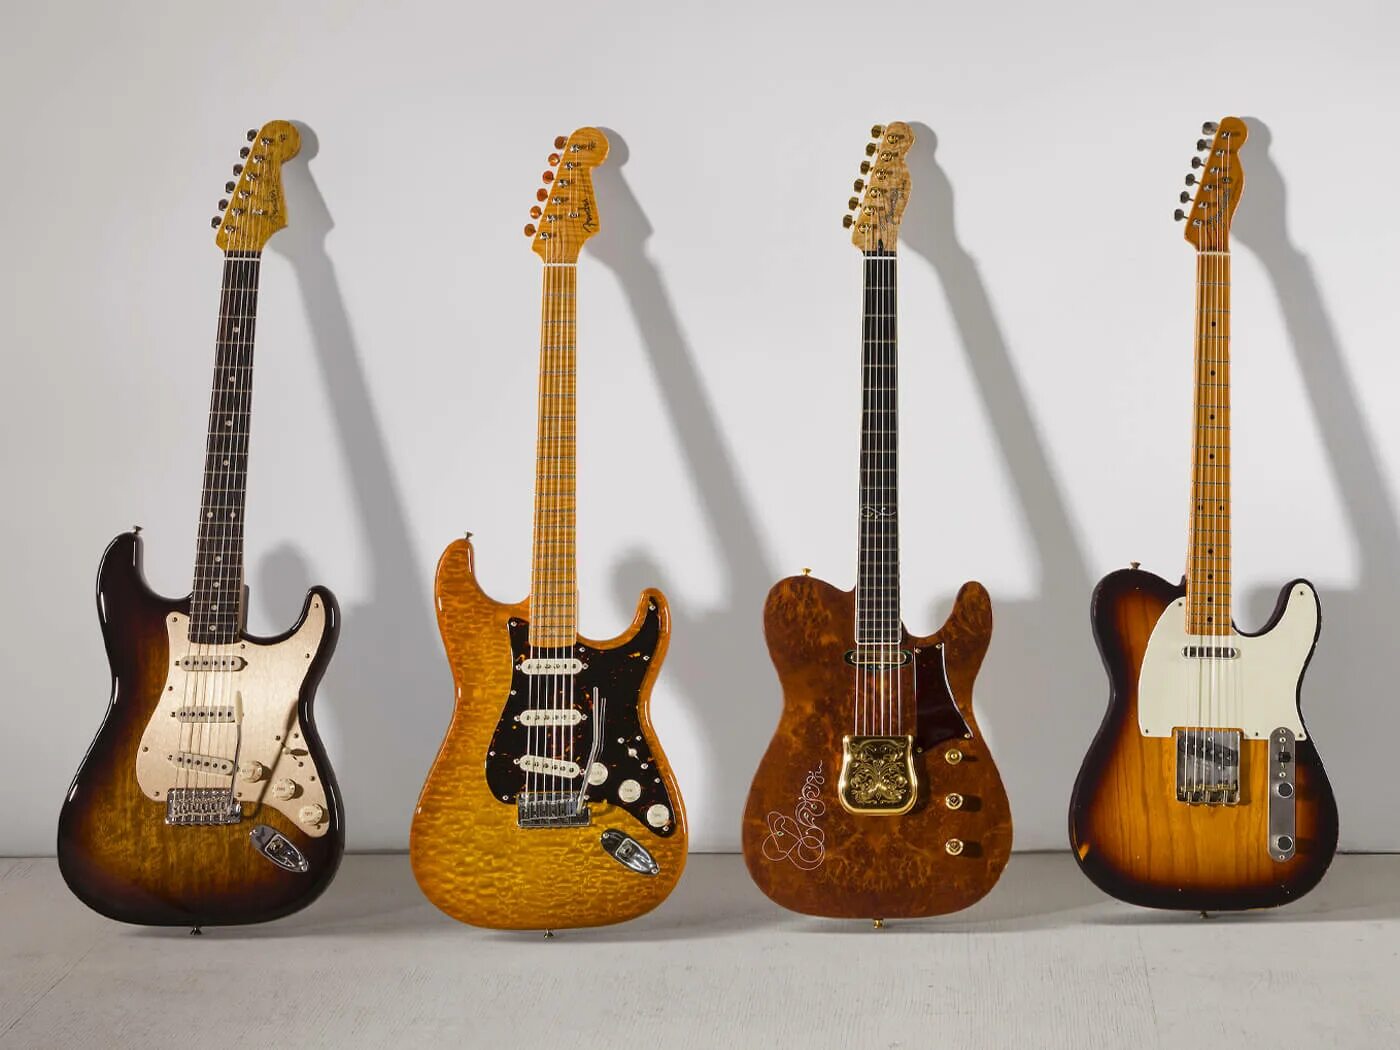 Гитара фирмы Fender. Электрогитары фирмы Fender. Американские фирмы гитар. Коллекция гитар.